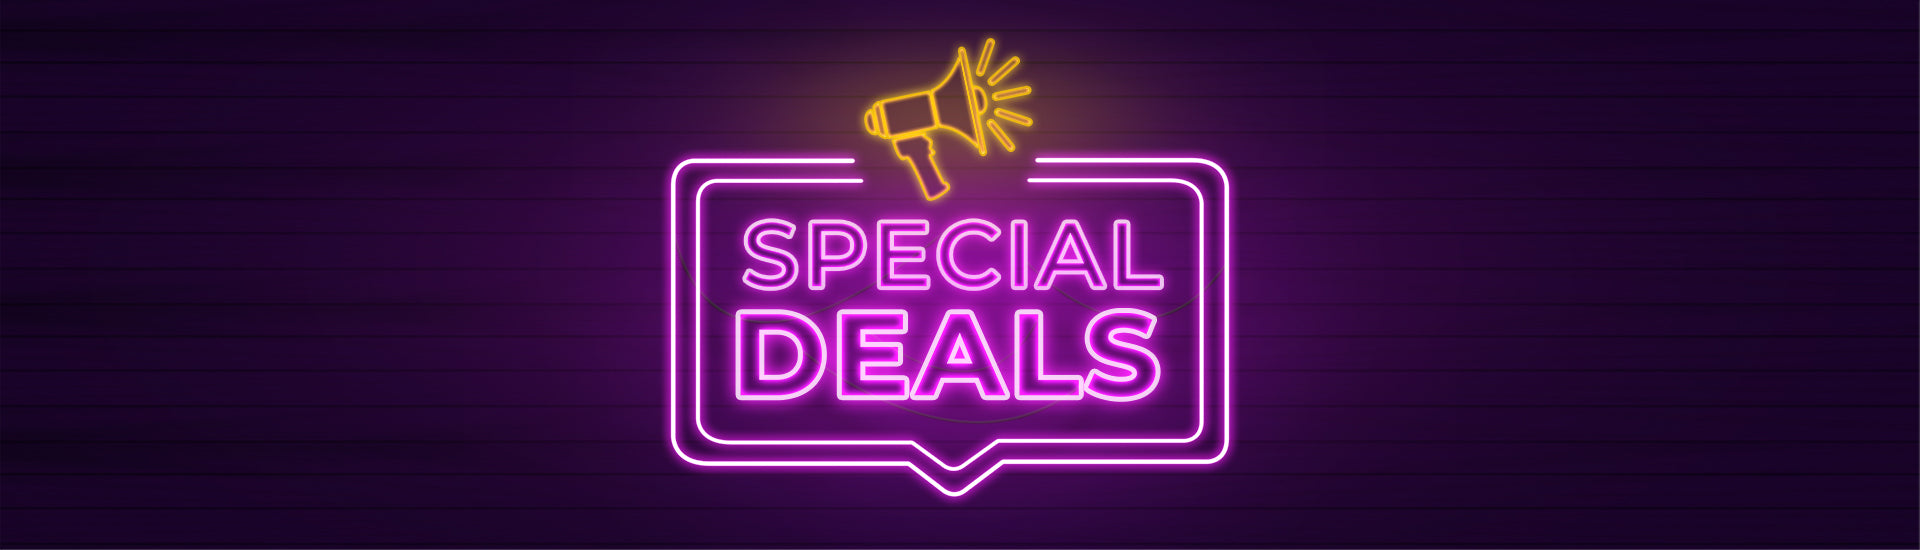 Special Deals Banner